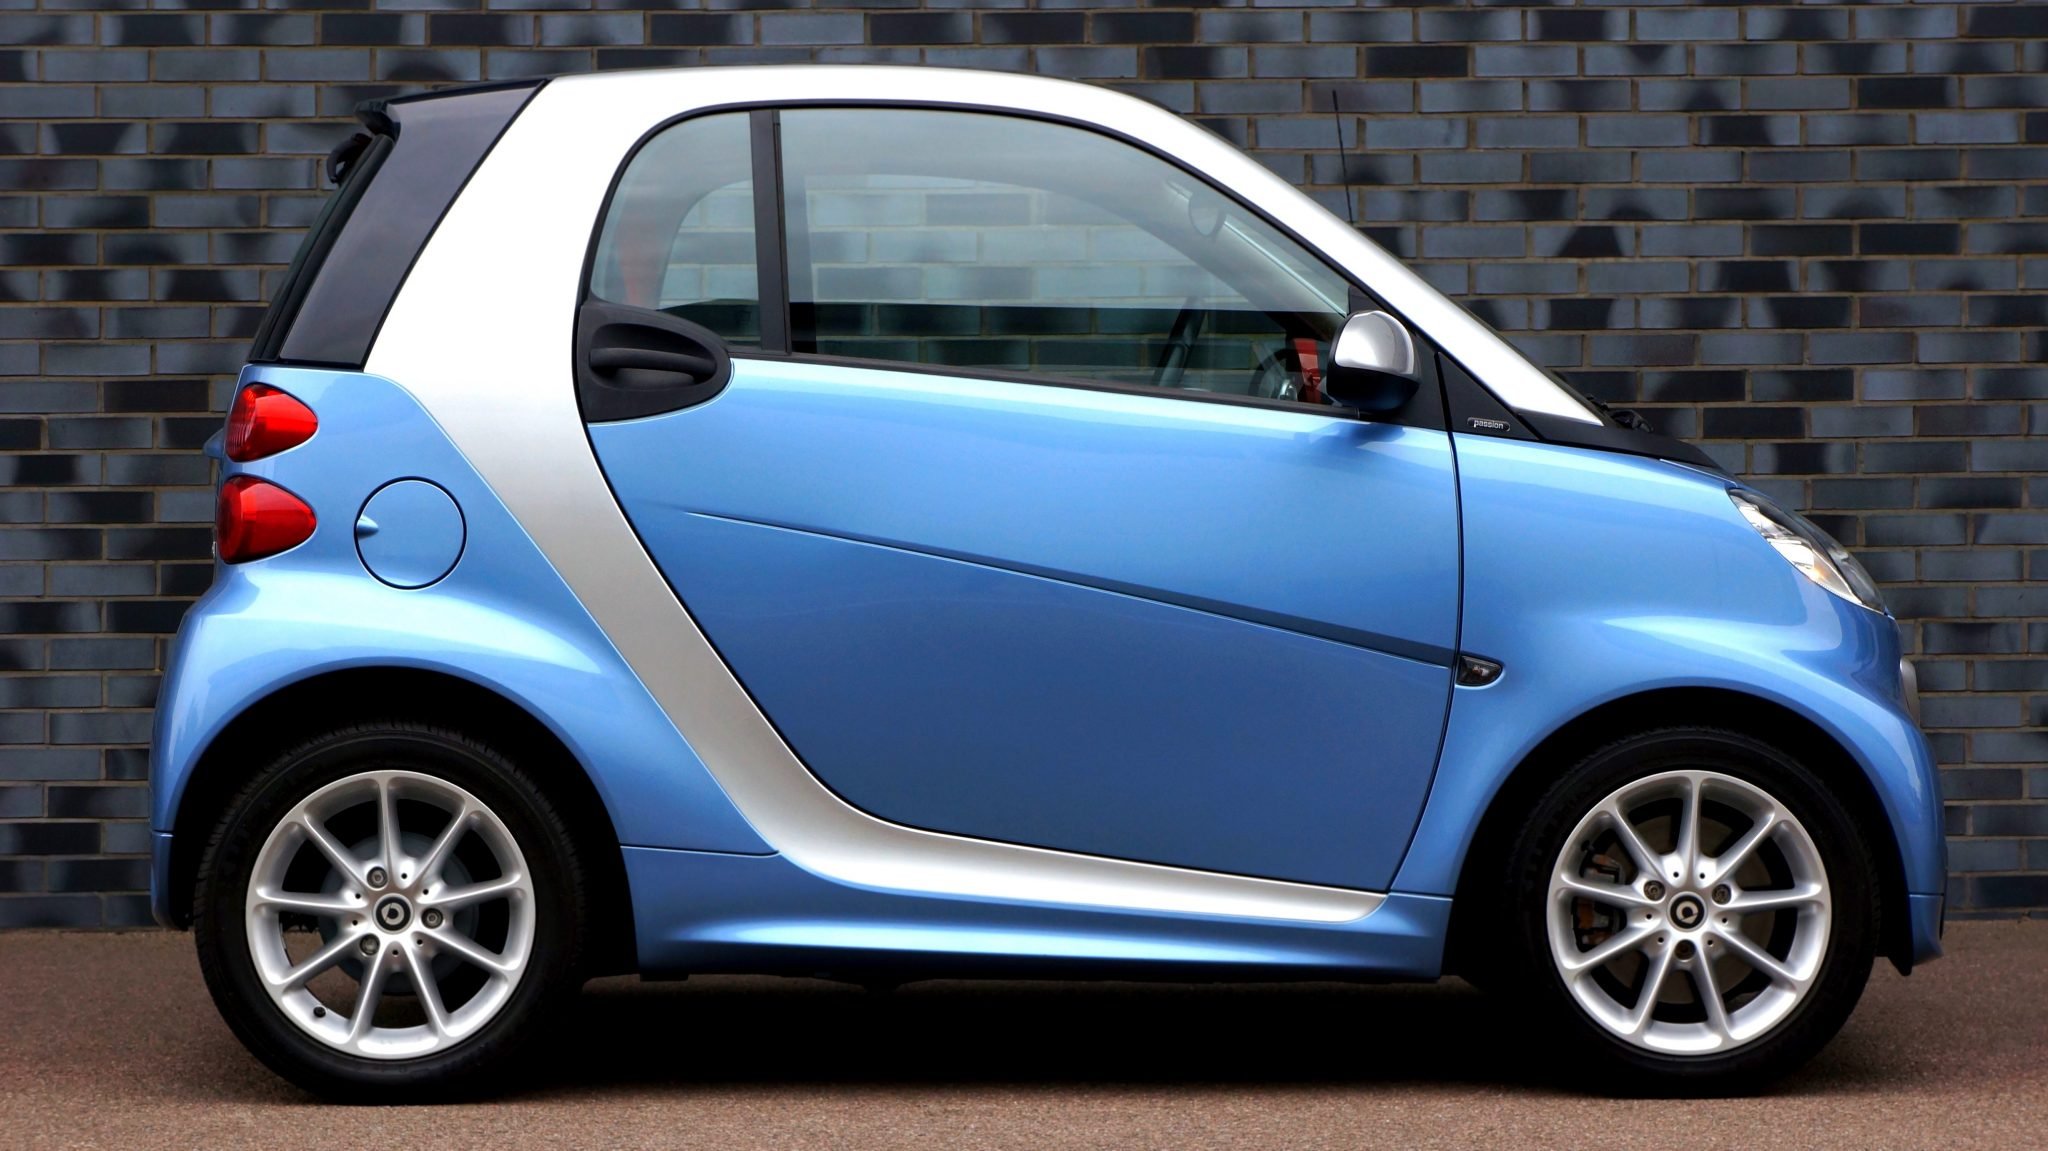 Автомобиль микро. Мини-кар Smart Fortwo 2. BMW смарт 2х дверная малолитражка. Smart Fortwo голубой. БМВ смарт 4 дверная.